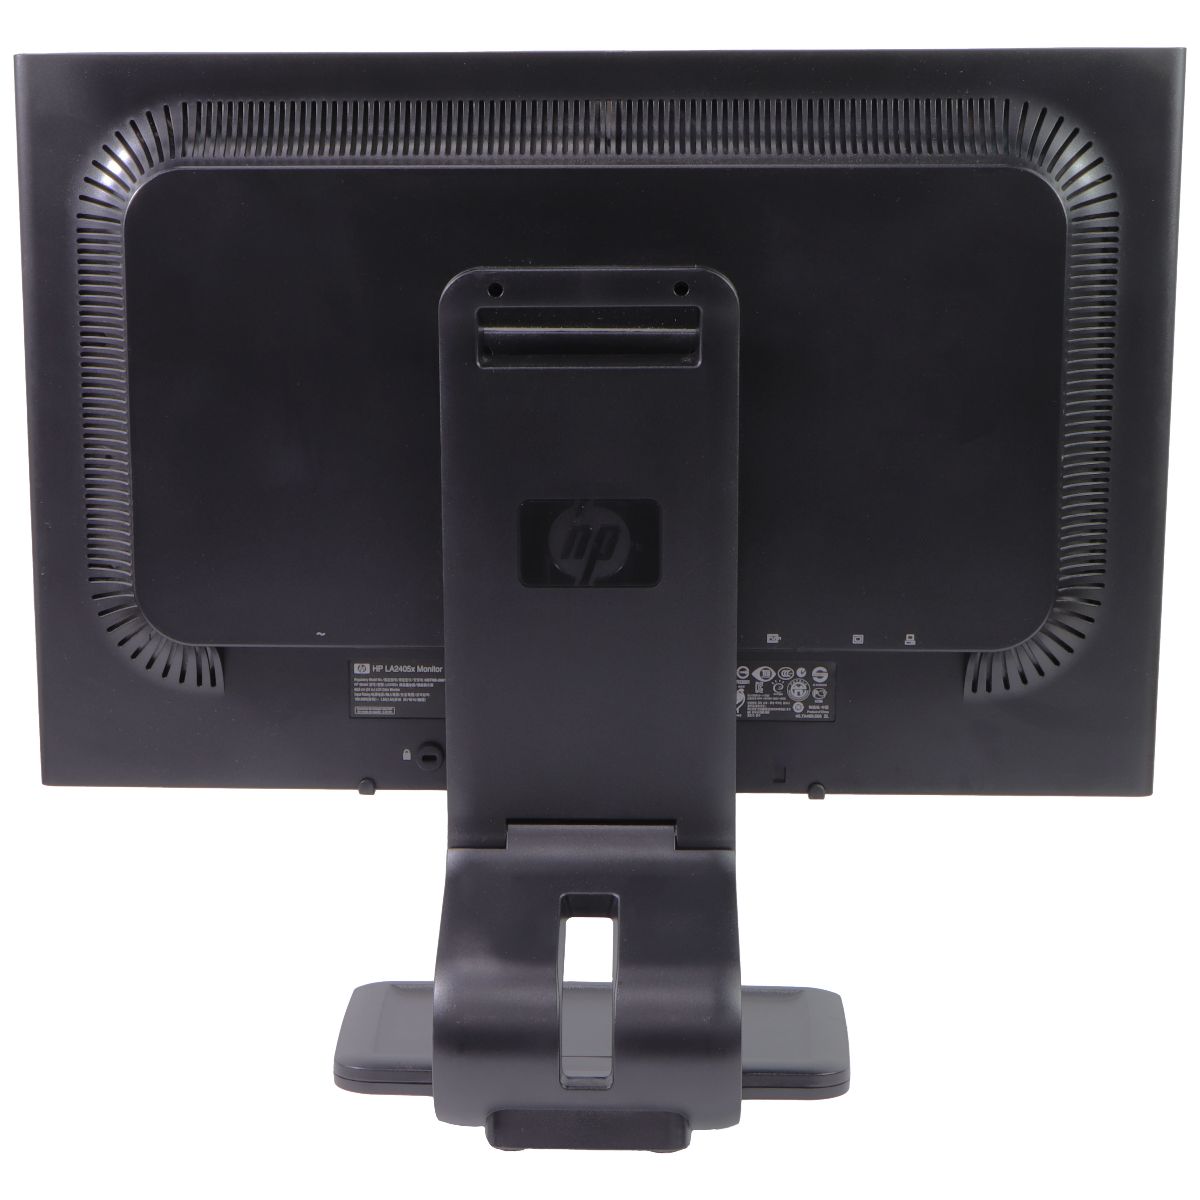 HP Compaq (LA2405x) 24-inch LED Backlit LCD Monitor - Black Digital Displays - Monitors HP    - Simple Cell Bulk Wholesale Pricing - USA Seller